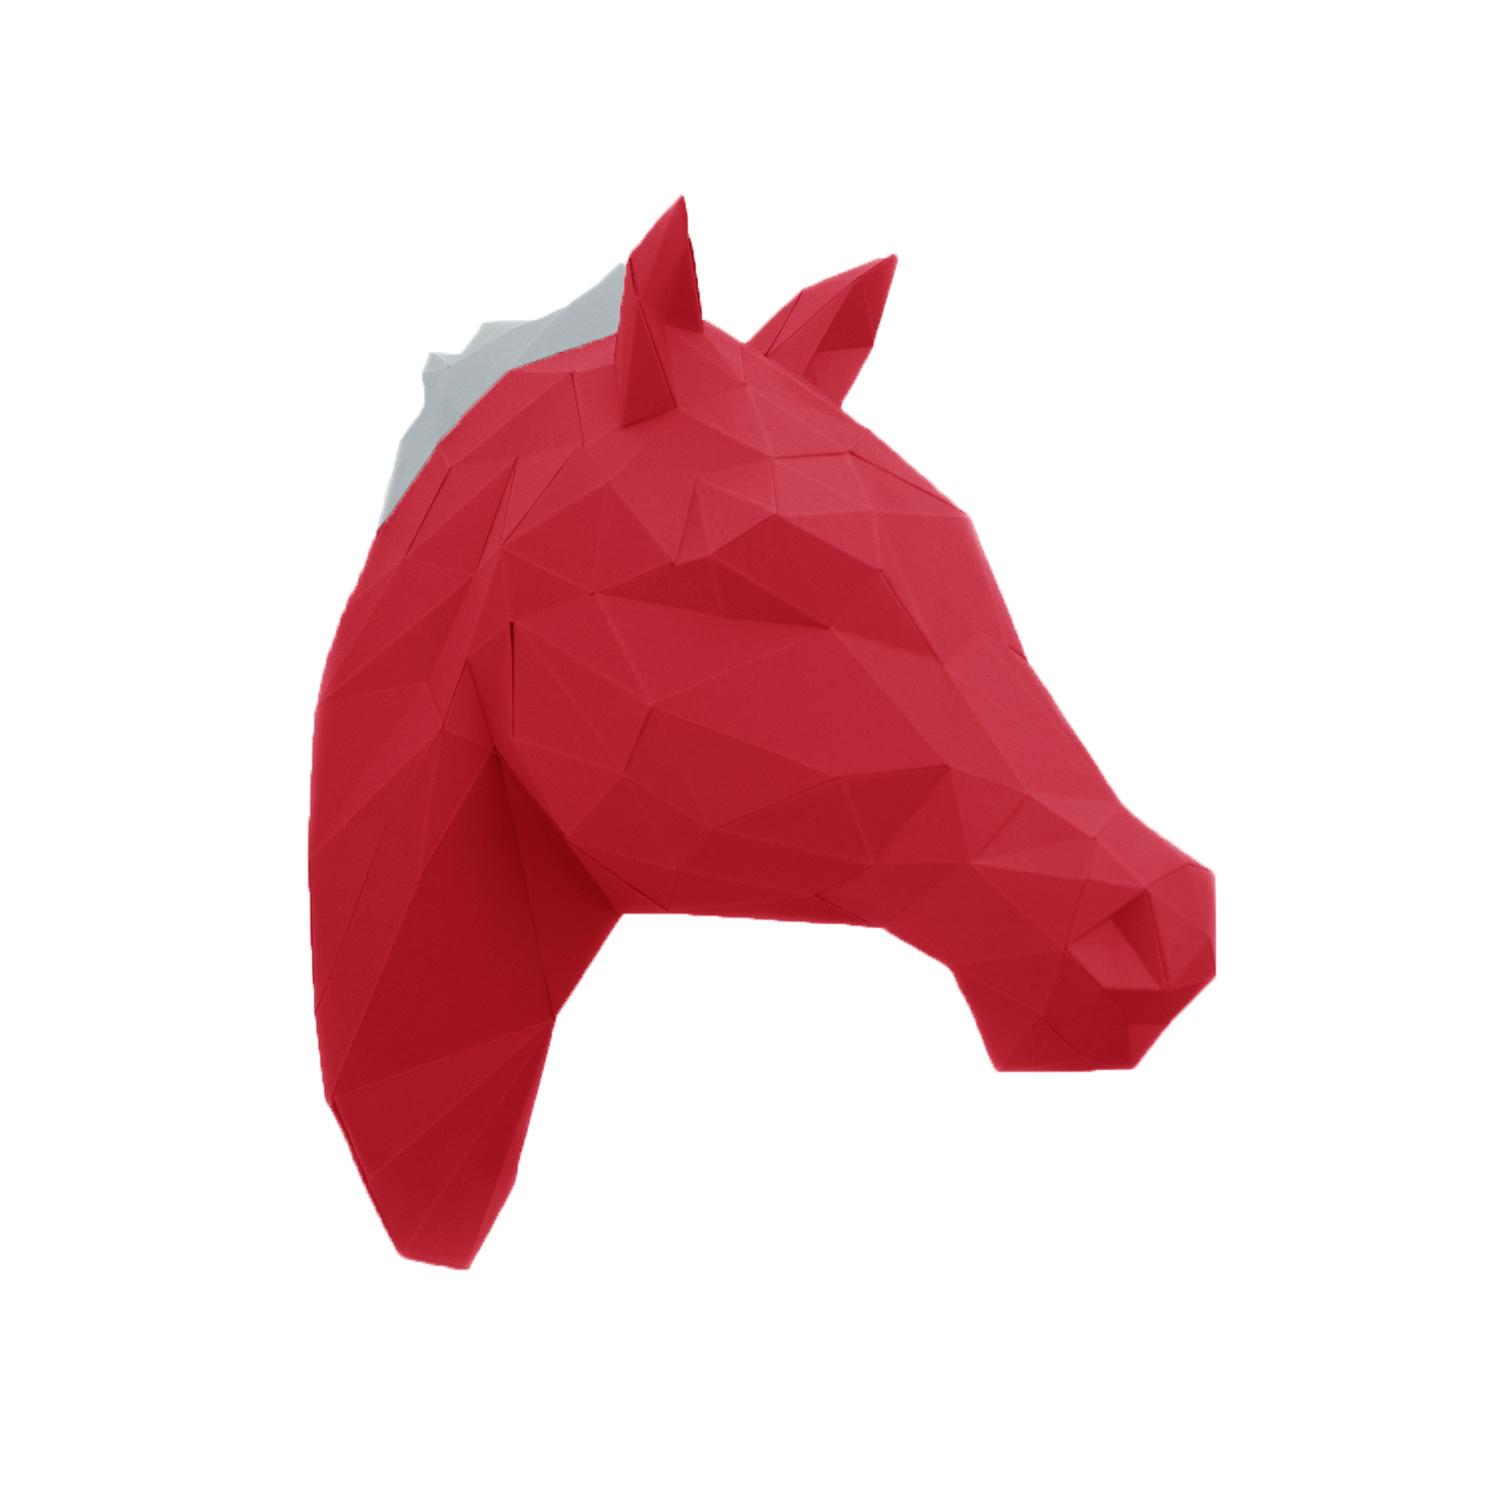 Papierfigur Pferd rot #origami #wanddeko ©PaperShape